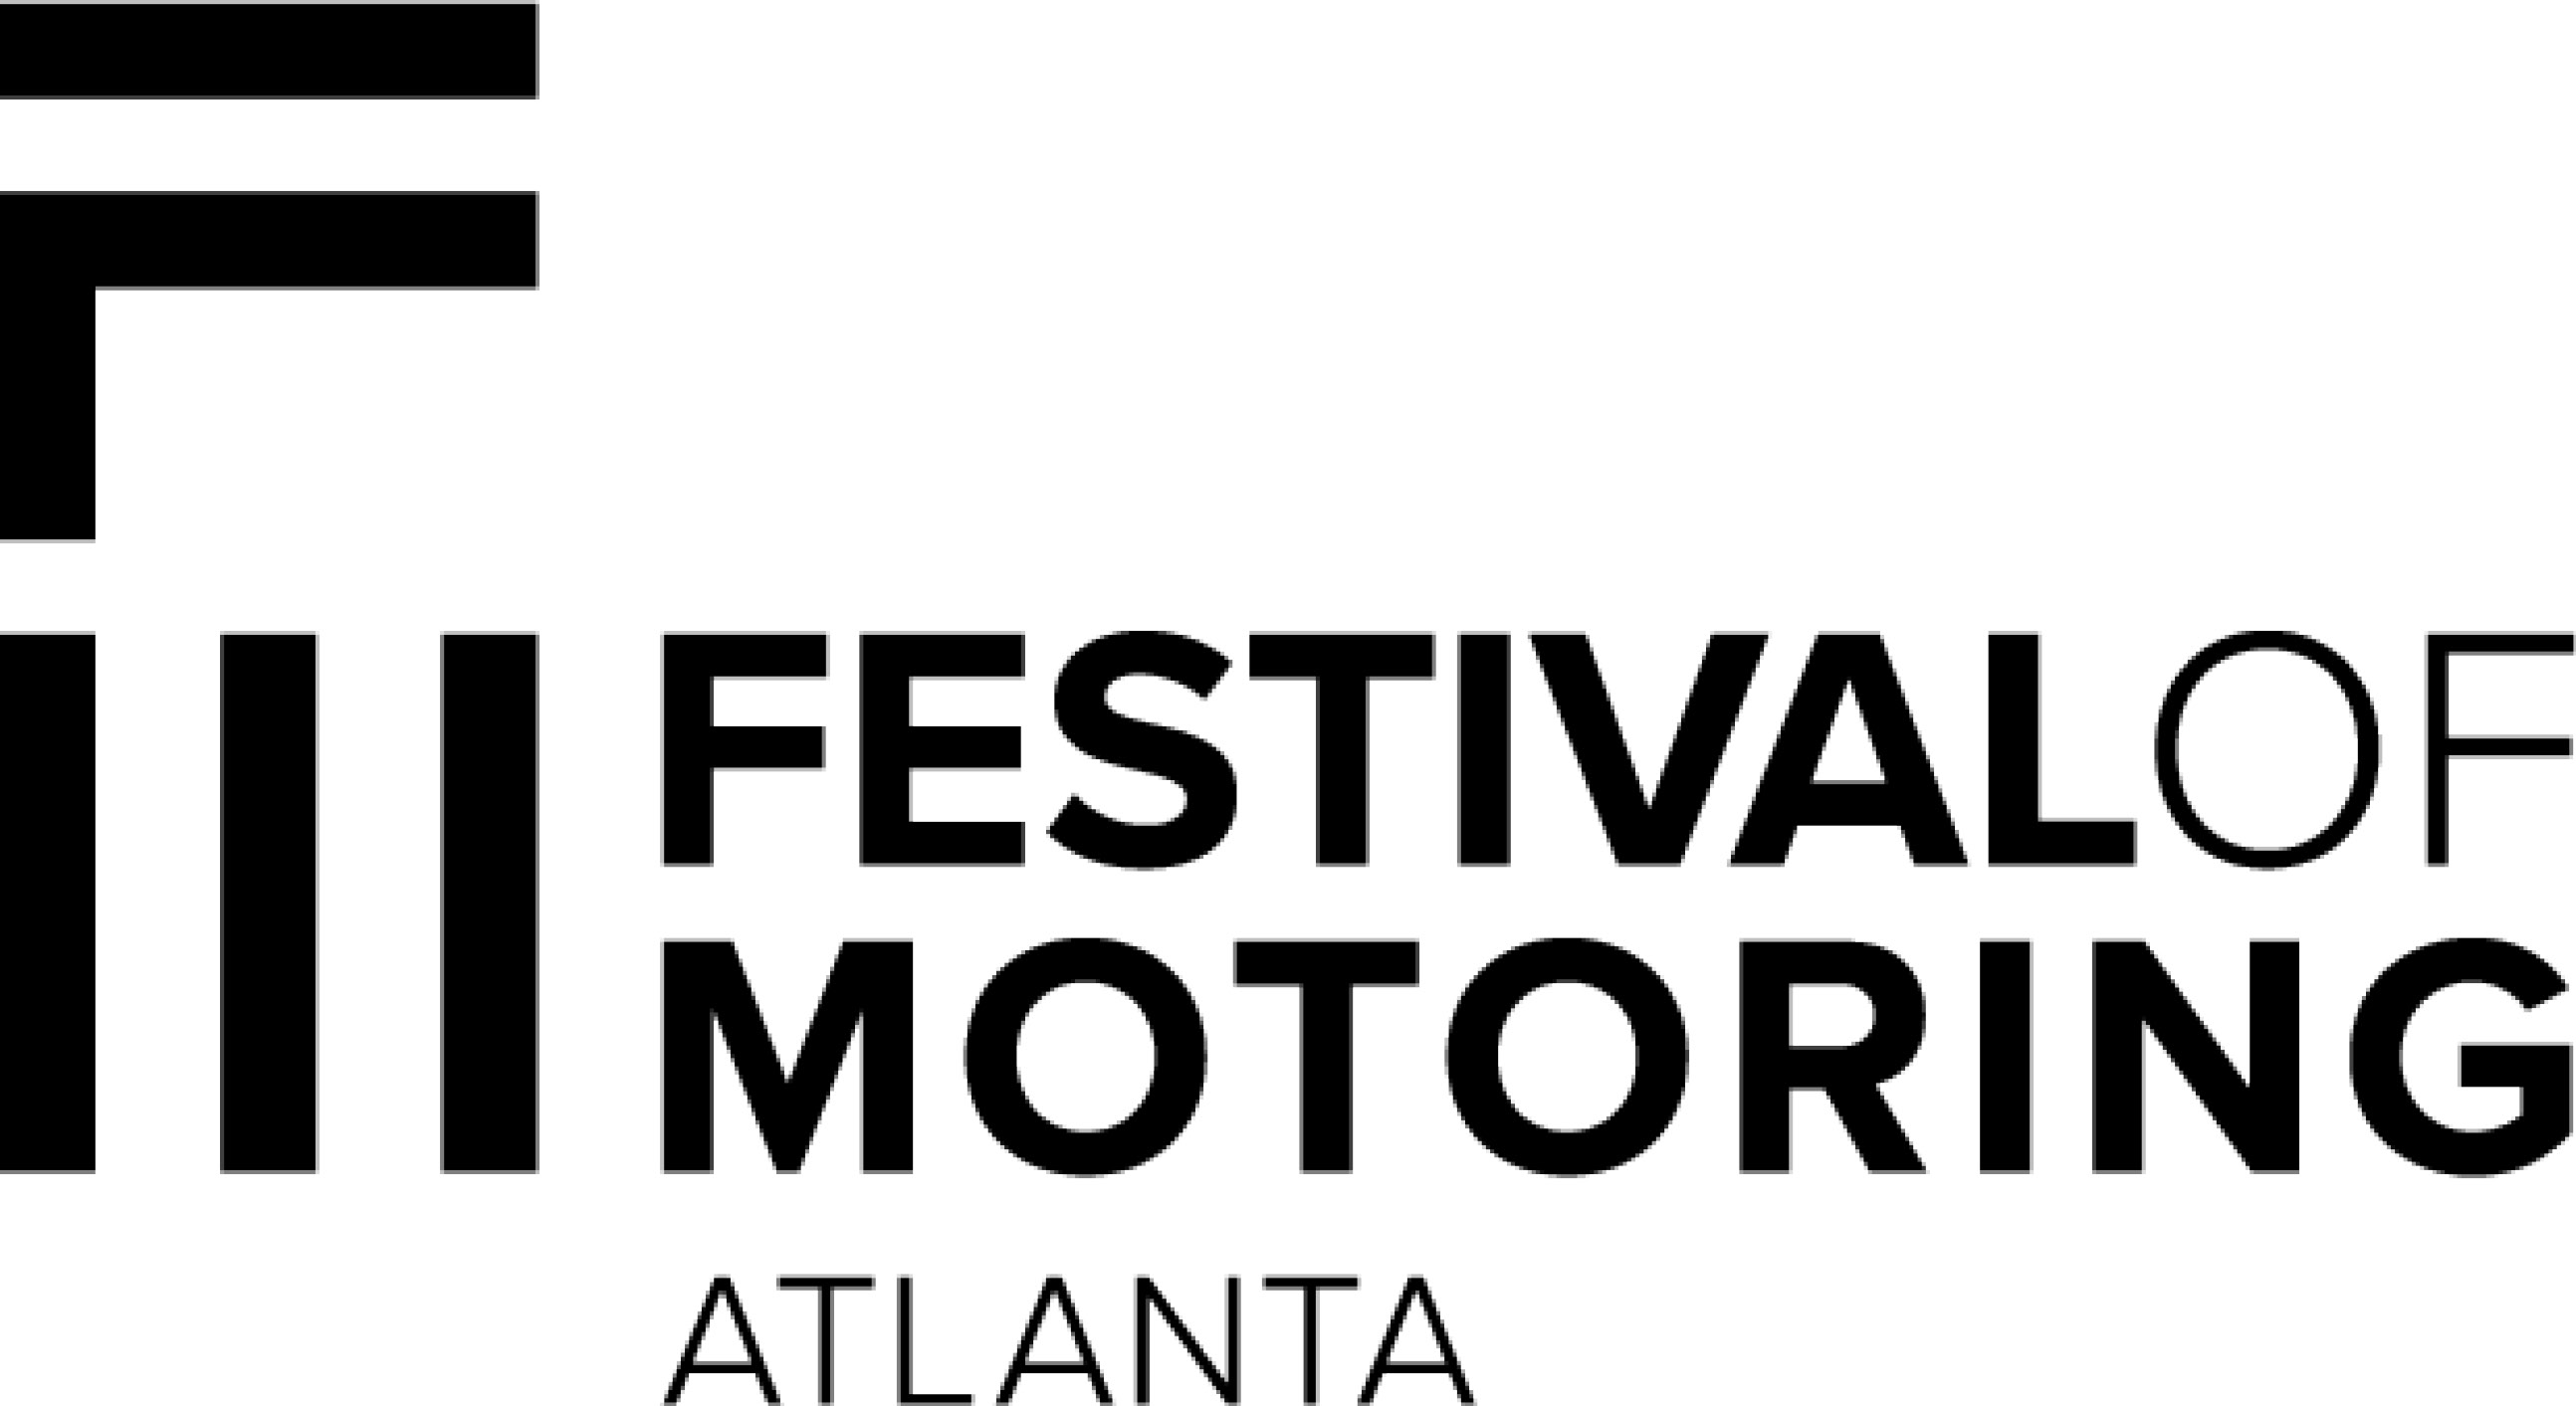 Festival of Motoring USA - Press